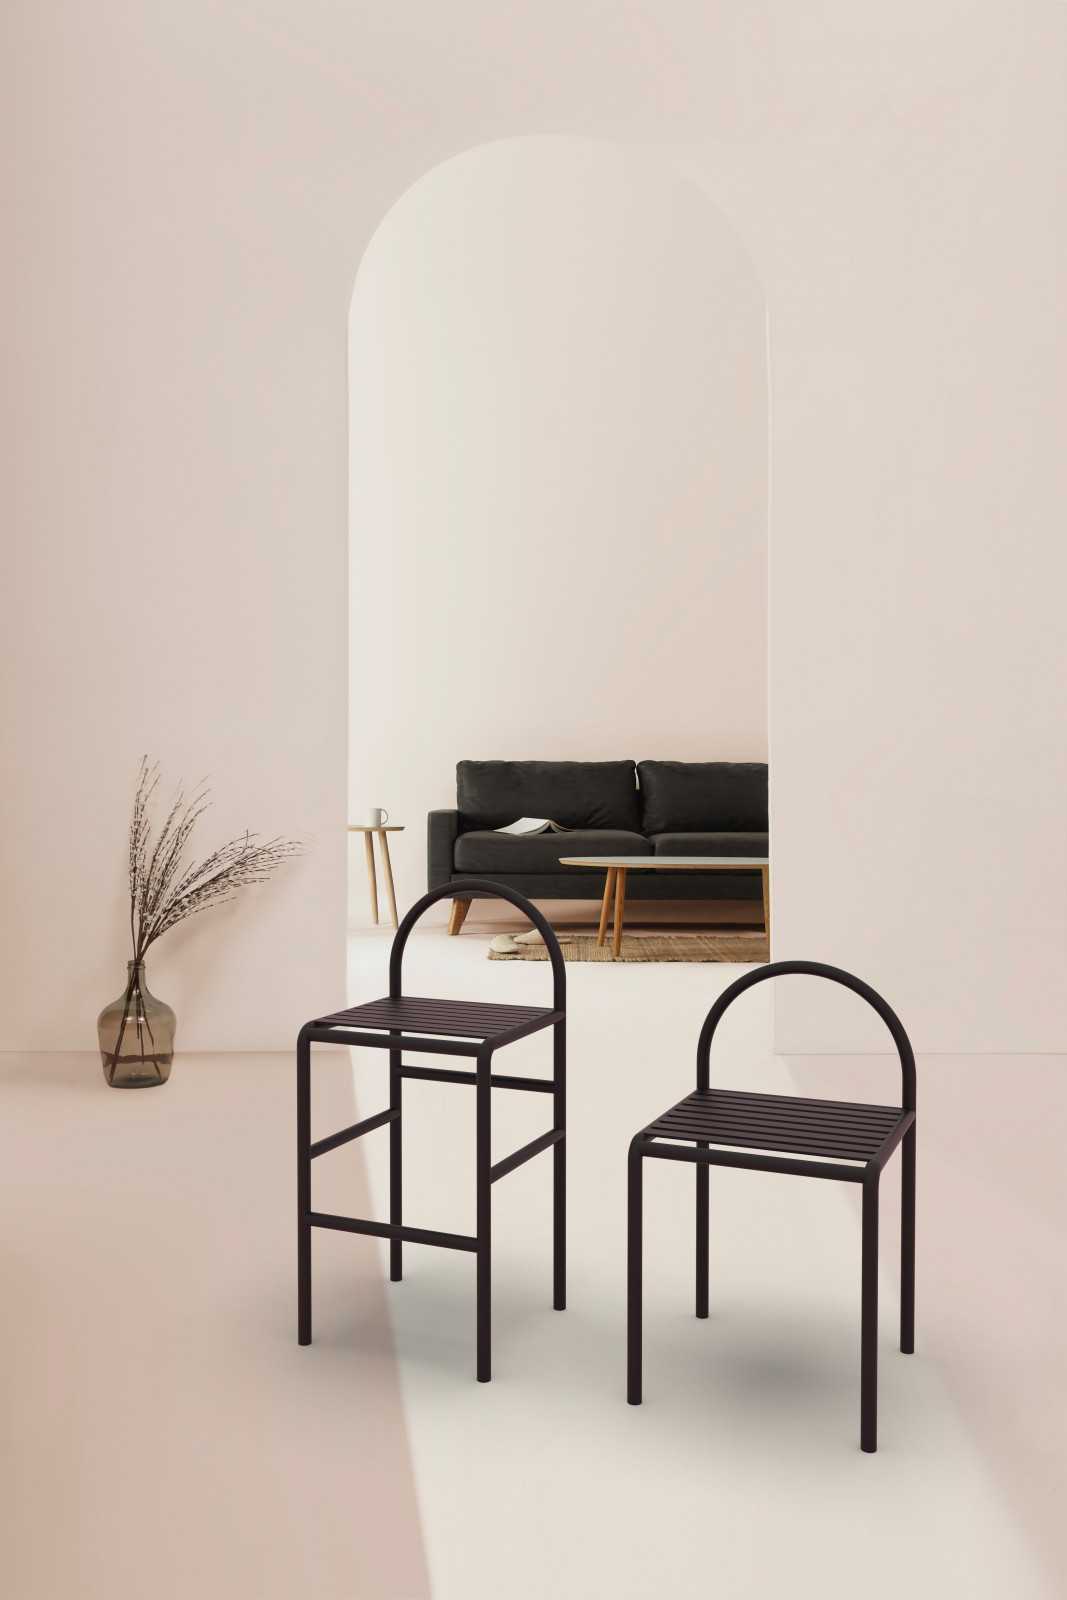 Afrienza为南非的新房主设计家具